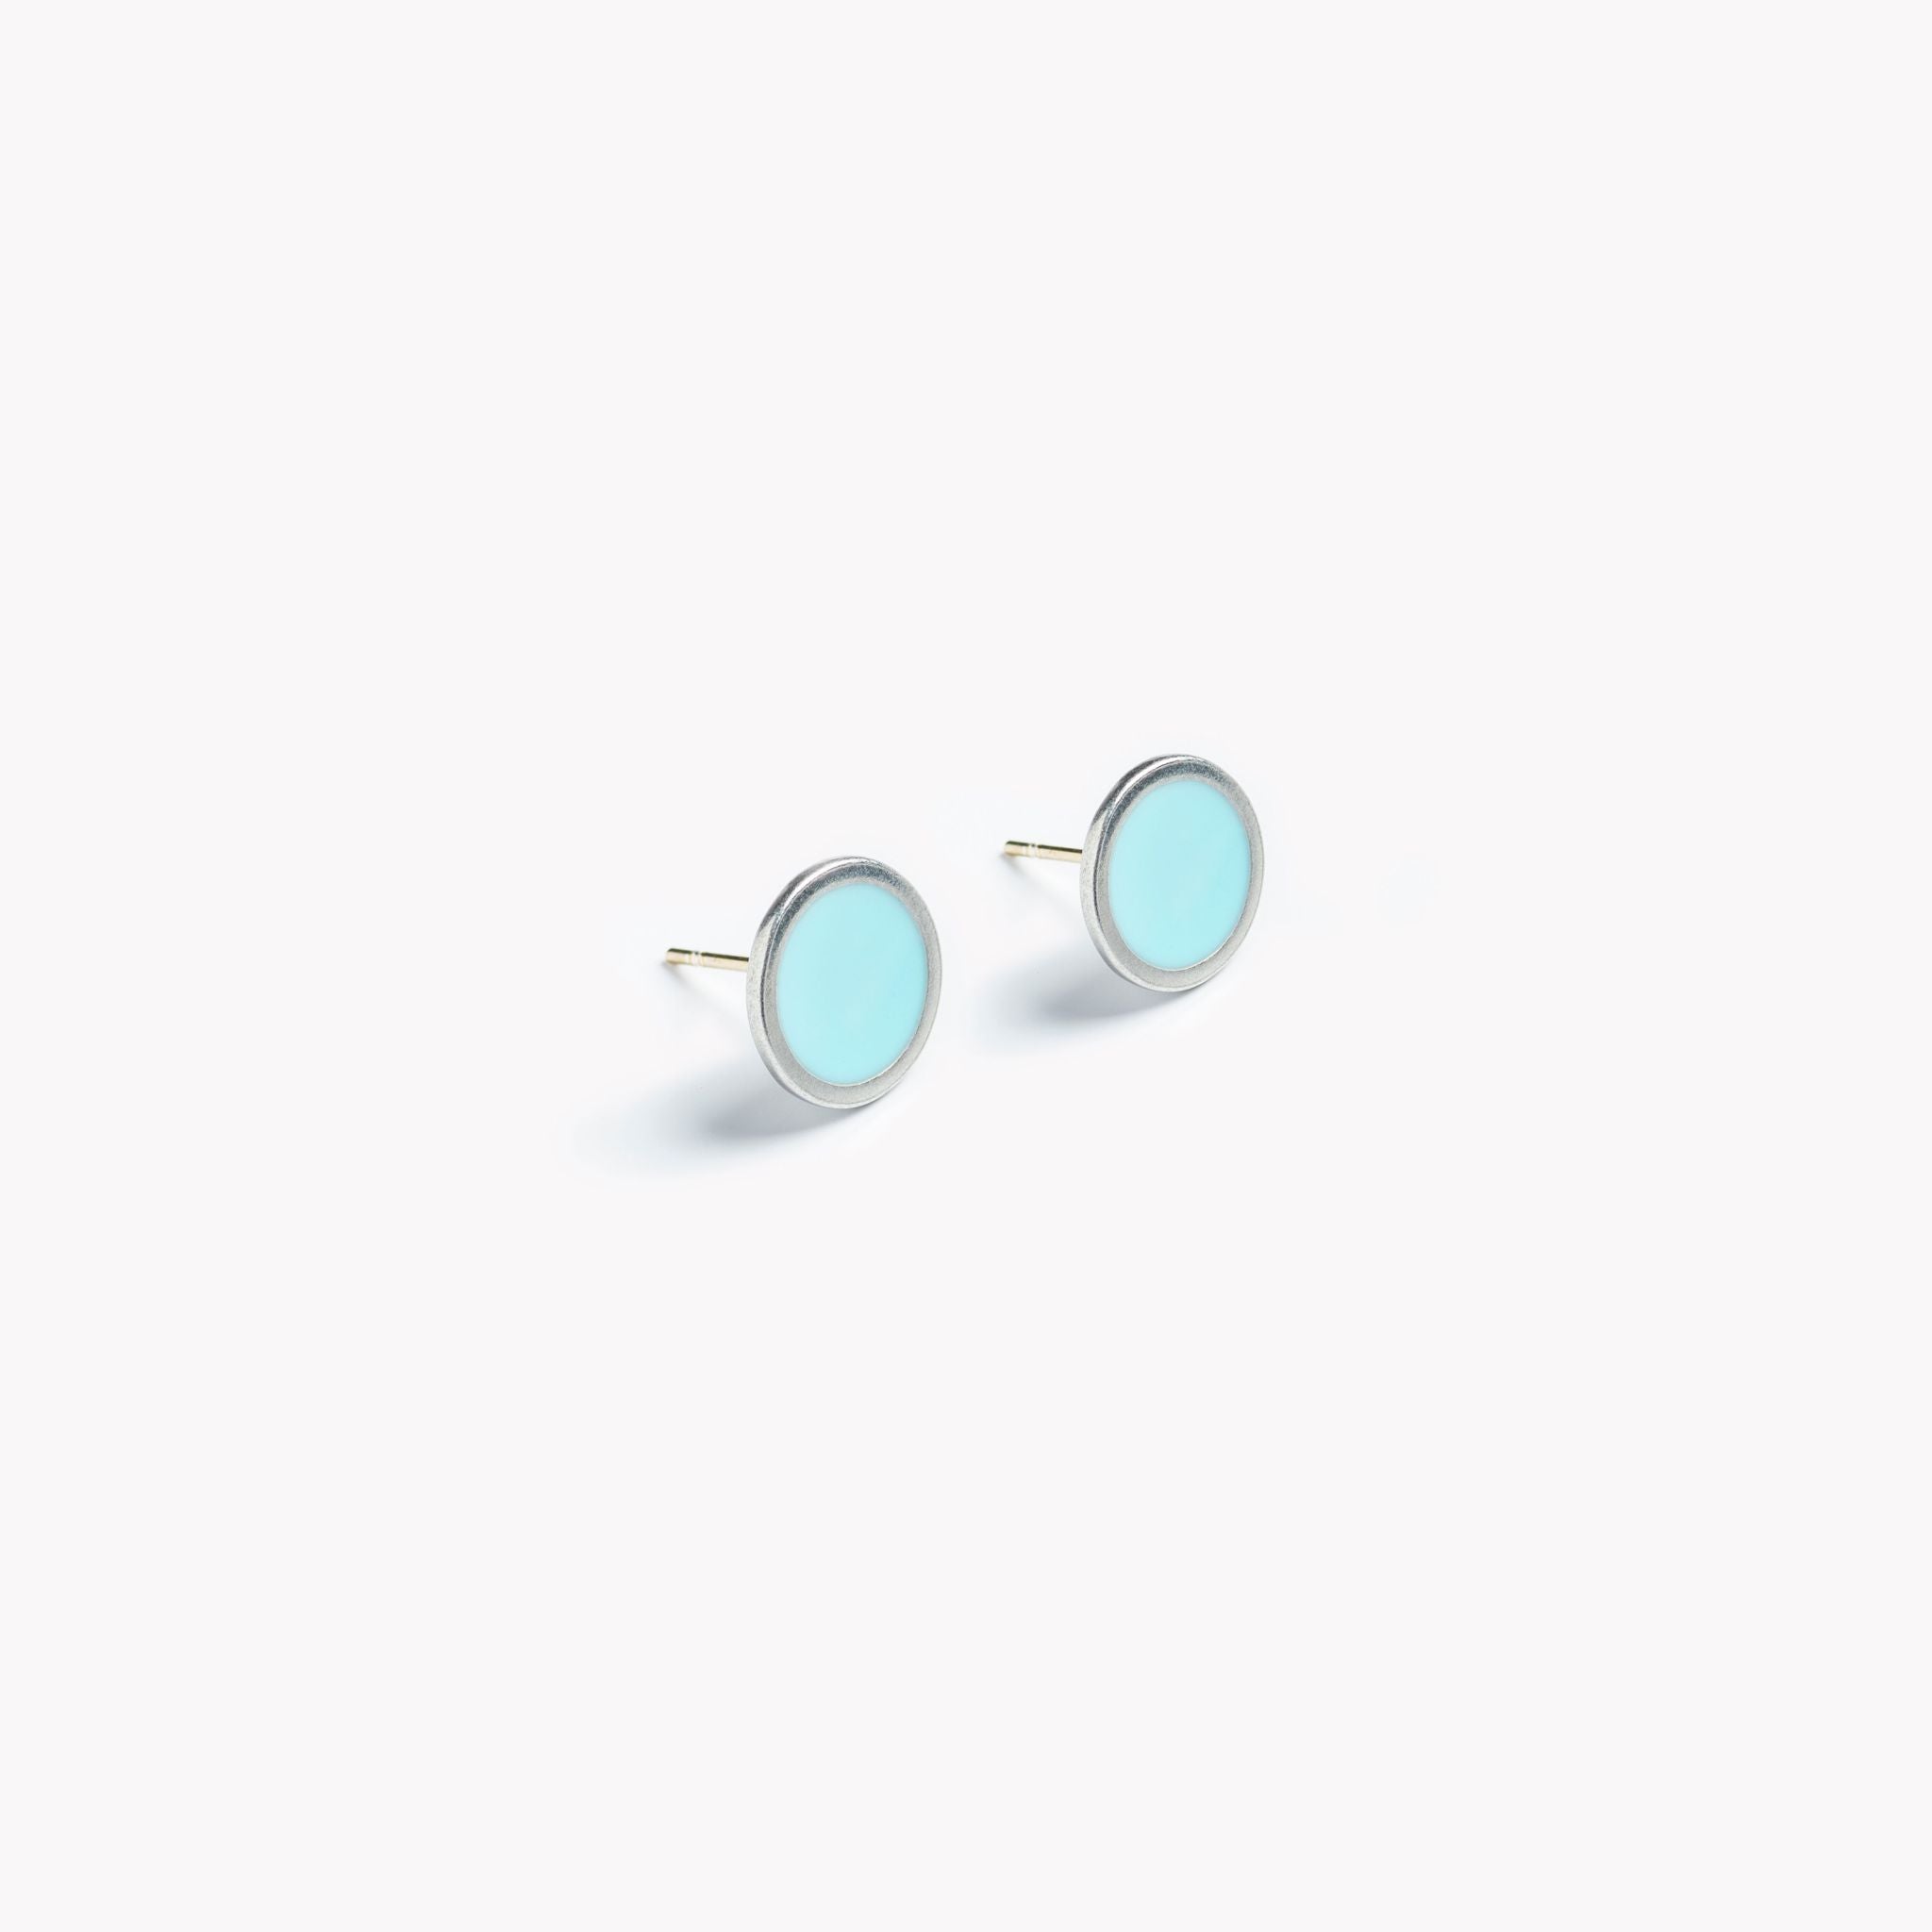 A simple pair of pale turquoise circular stud earrings.